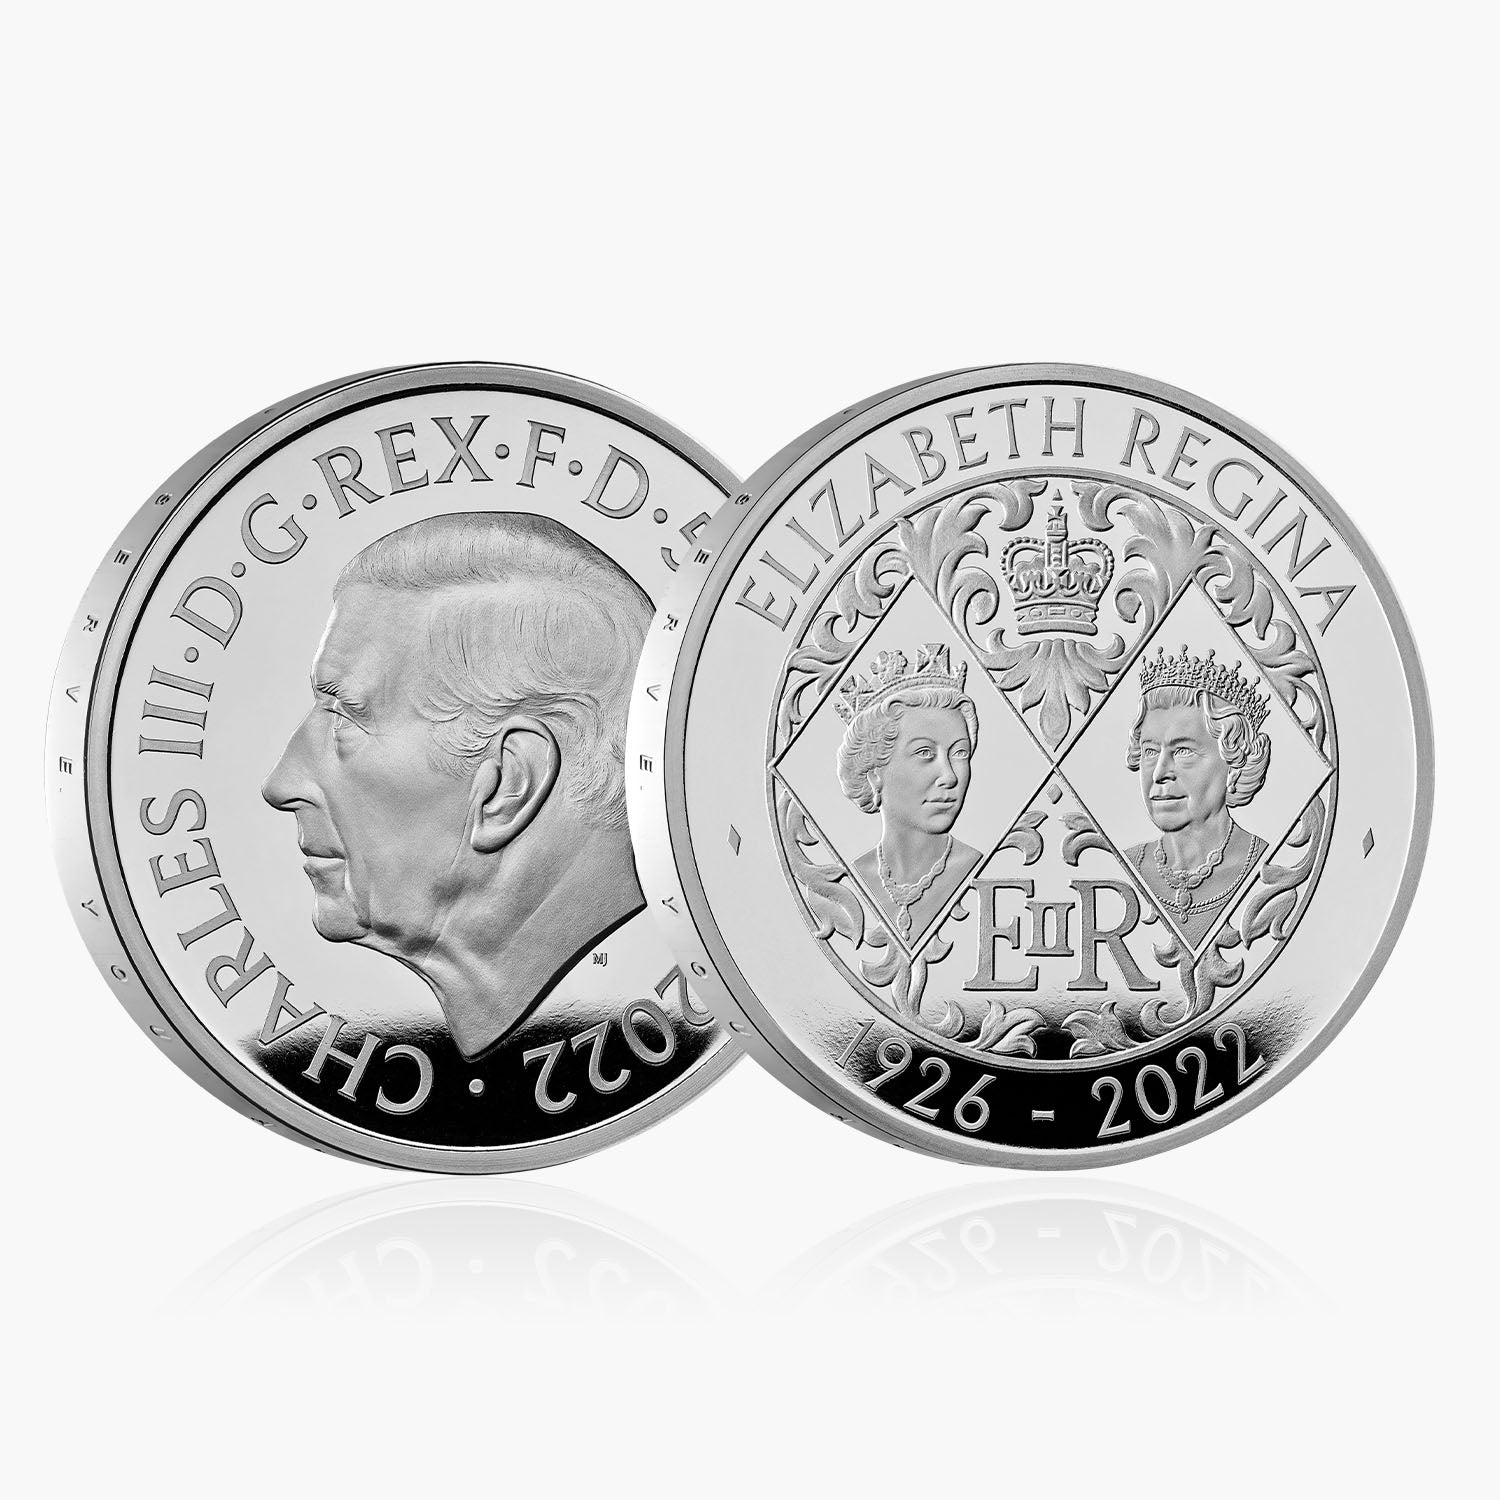 Her Majesty Queen Elizabeth II 2022 £5 Silver Piedfort Coin - King Charles III first portrait